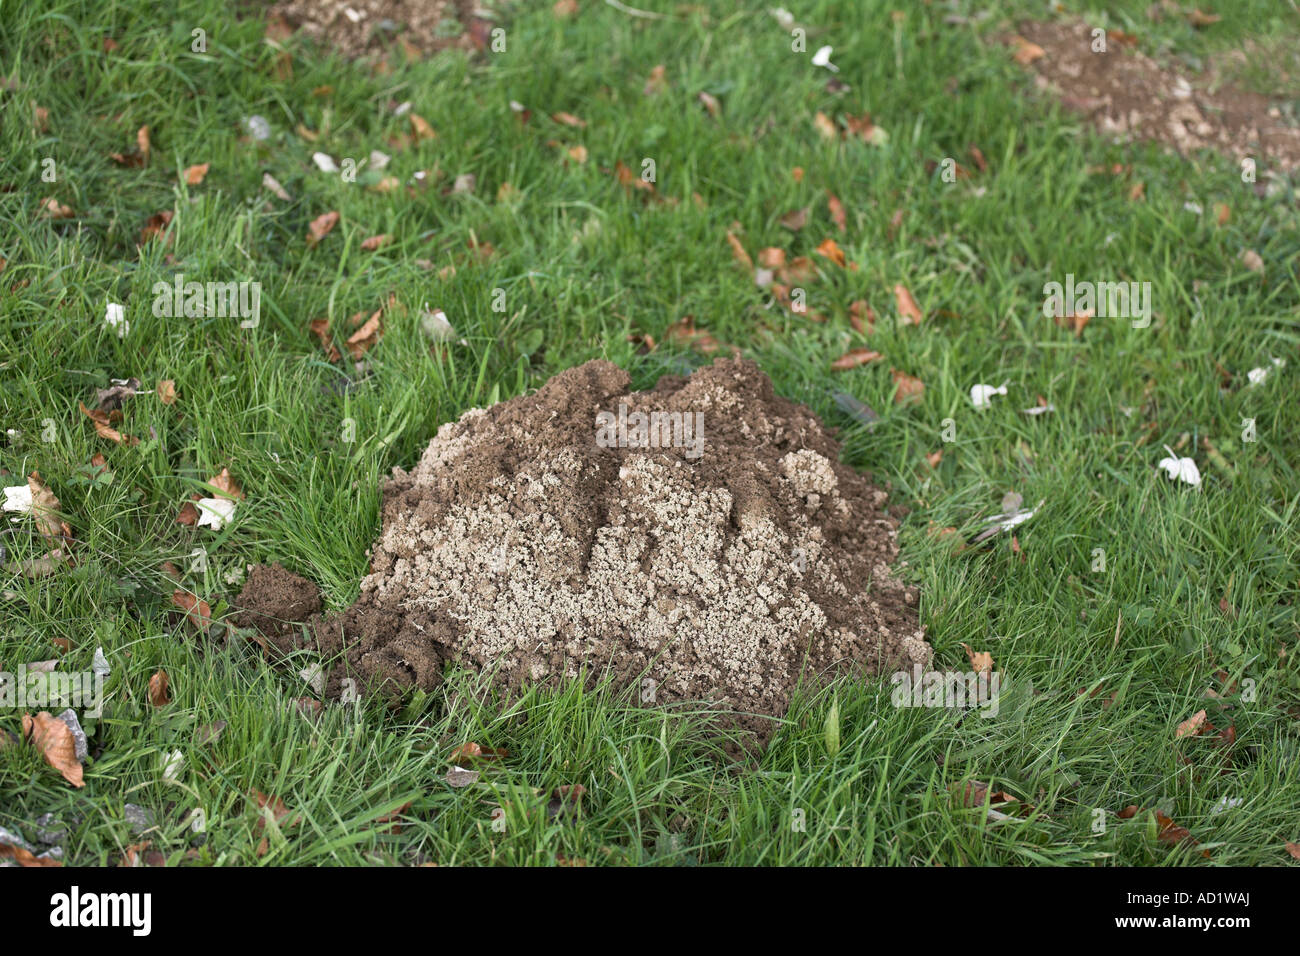 mole hill molehill in area of long grass Stock Photo